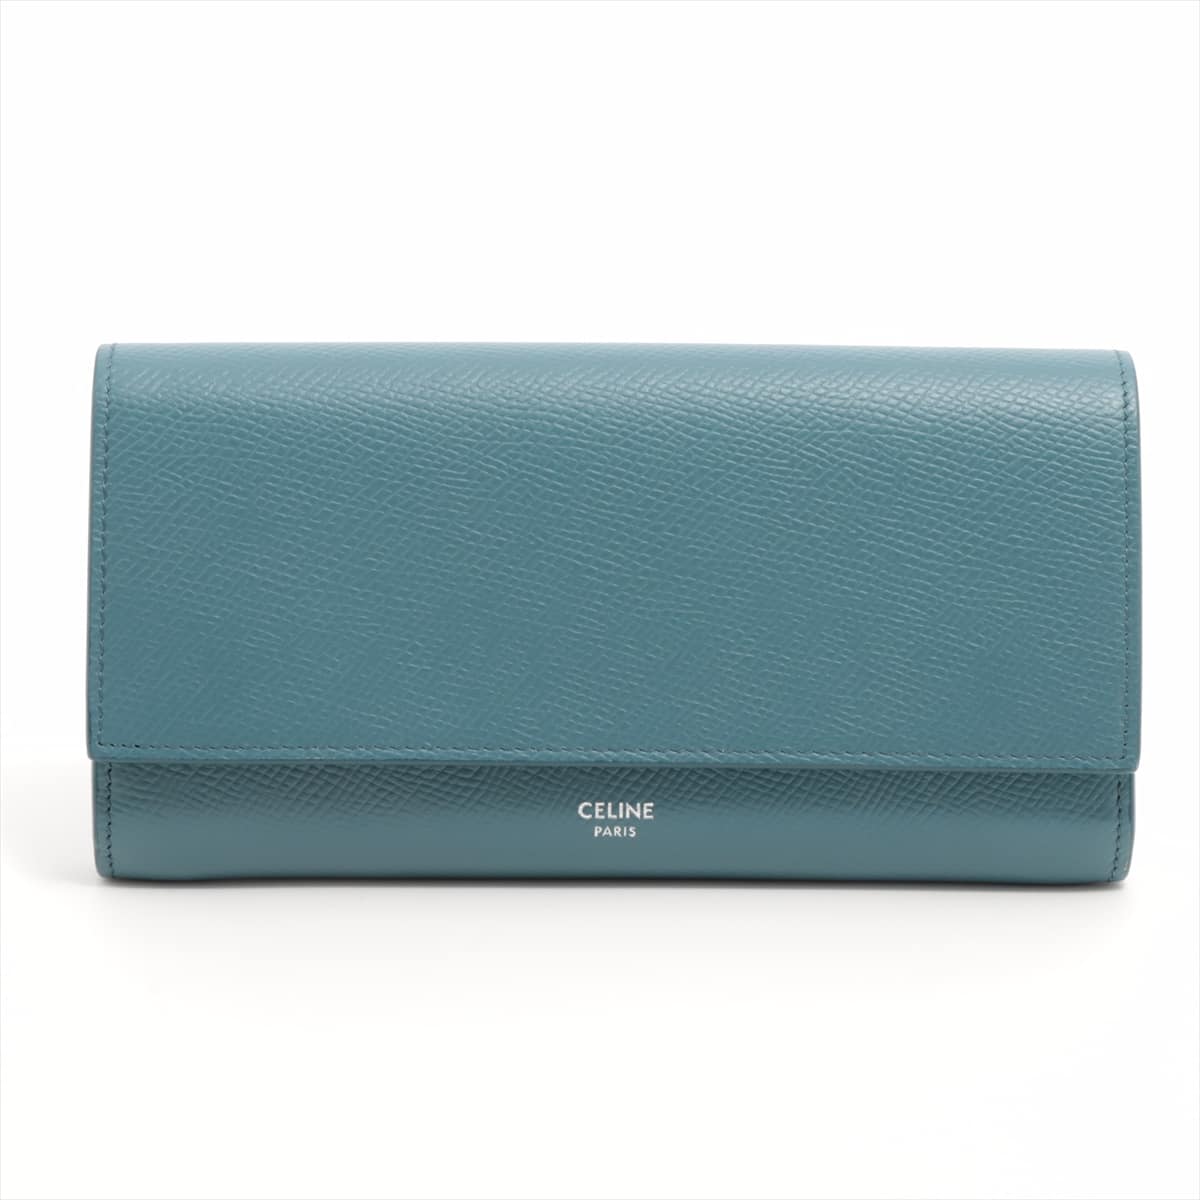 CELINE Large Flap Leather Wallet Blue